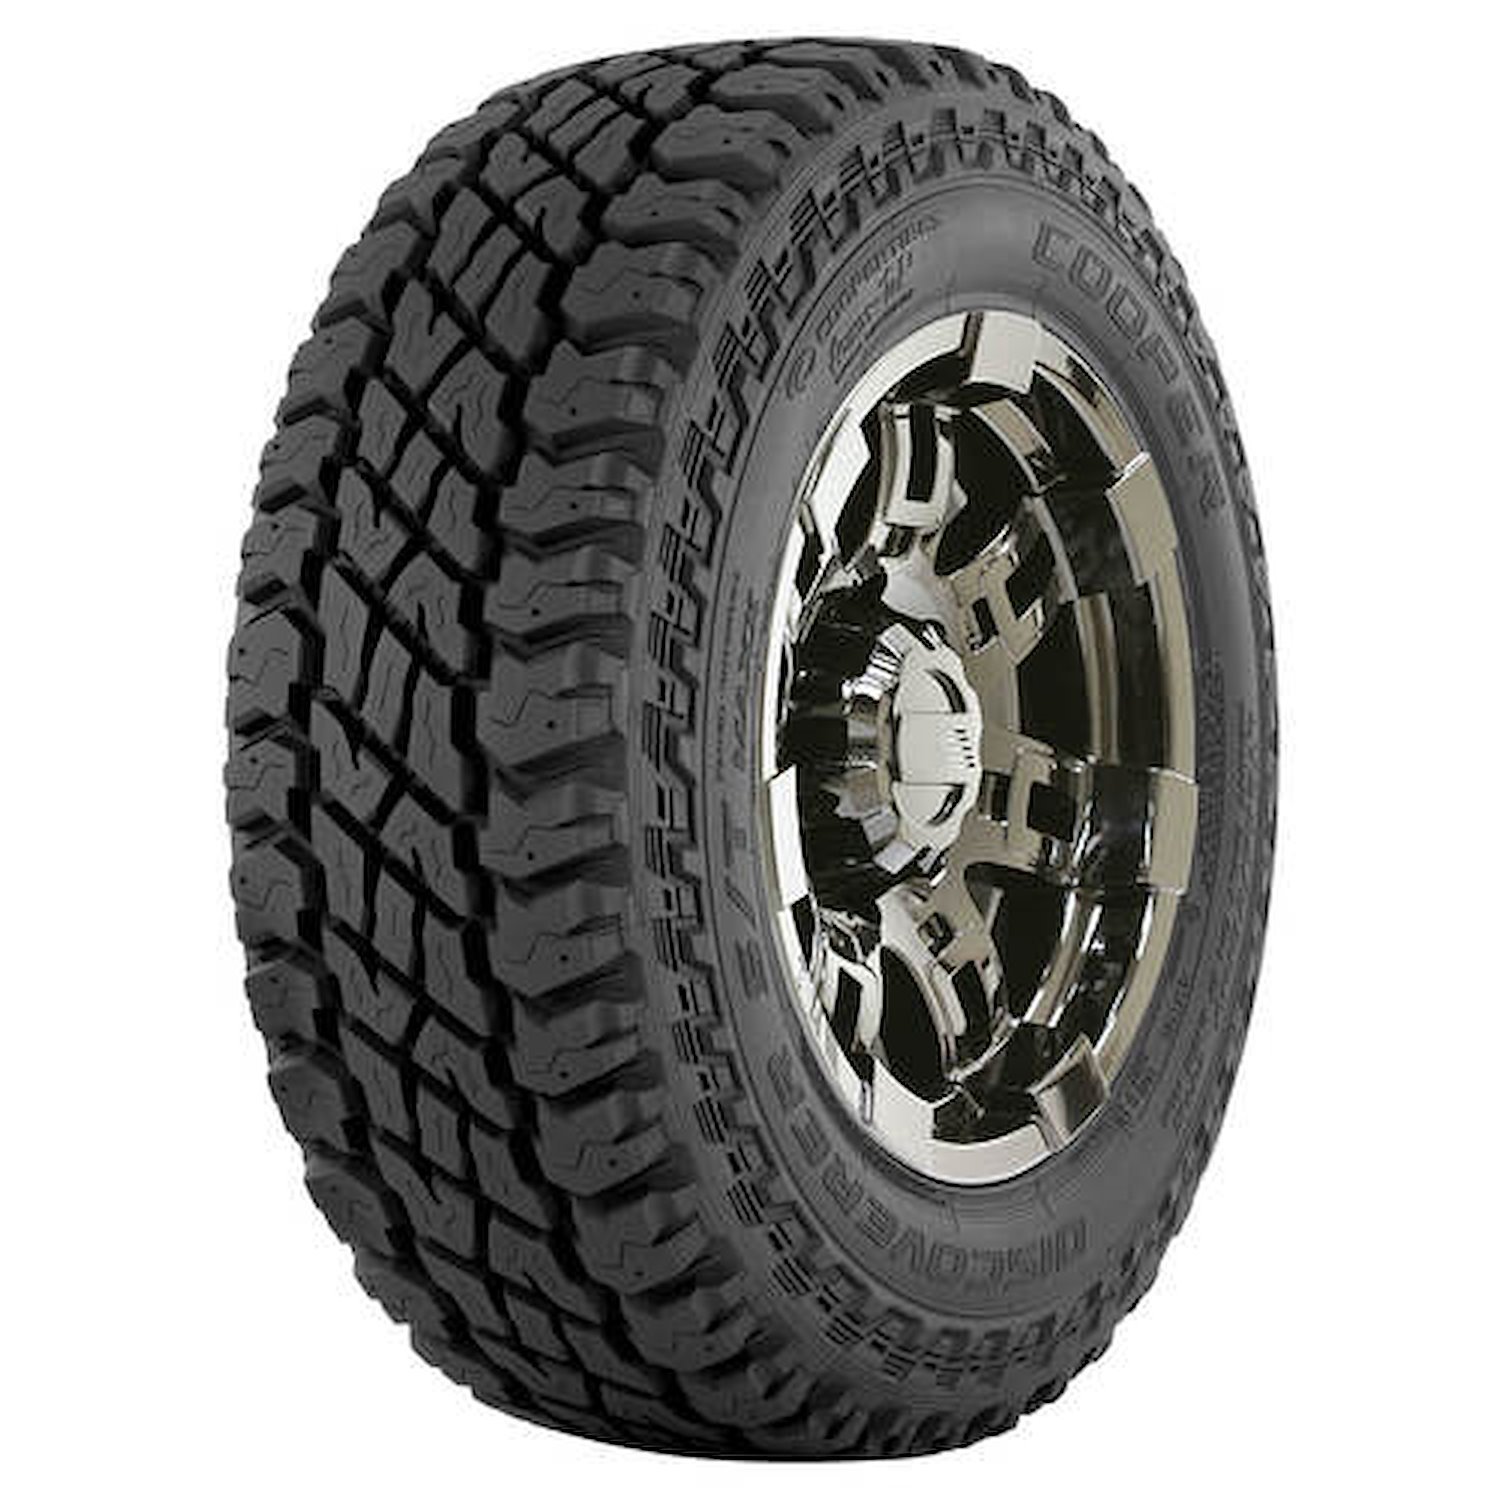 Discoverer S/T Maxx All-Terrain Tire, 35X12.50R20LT